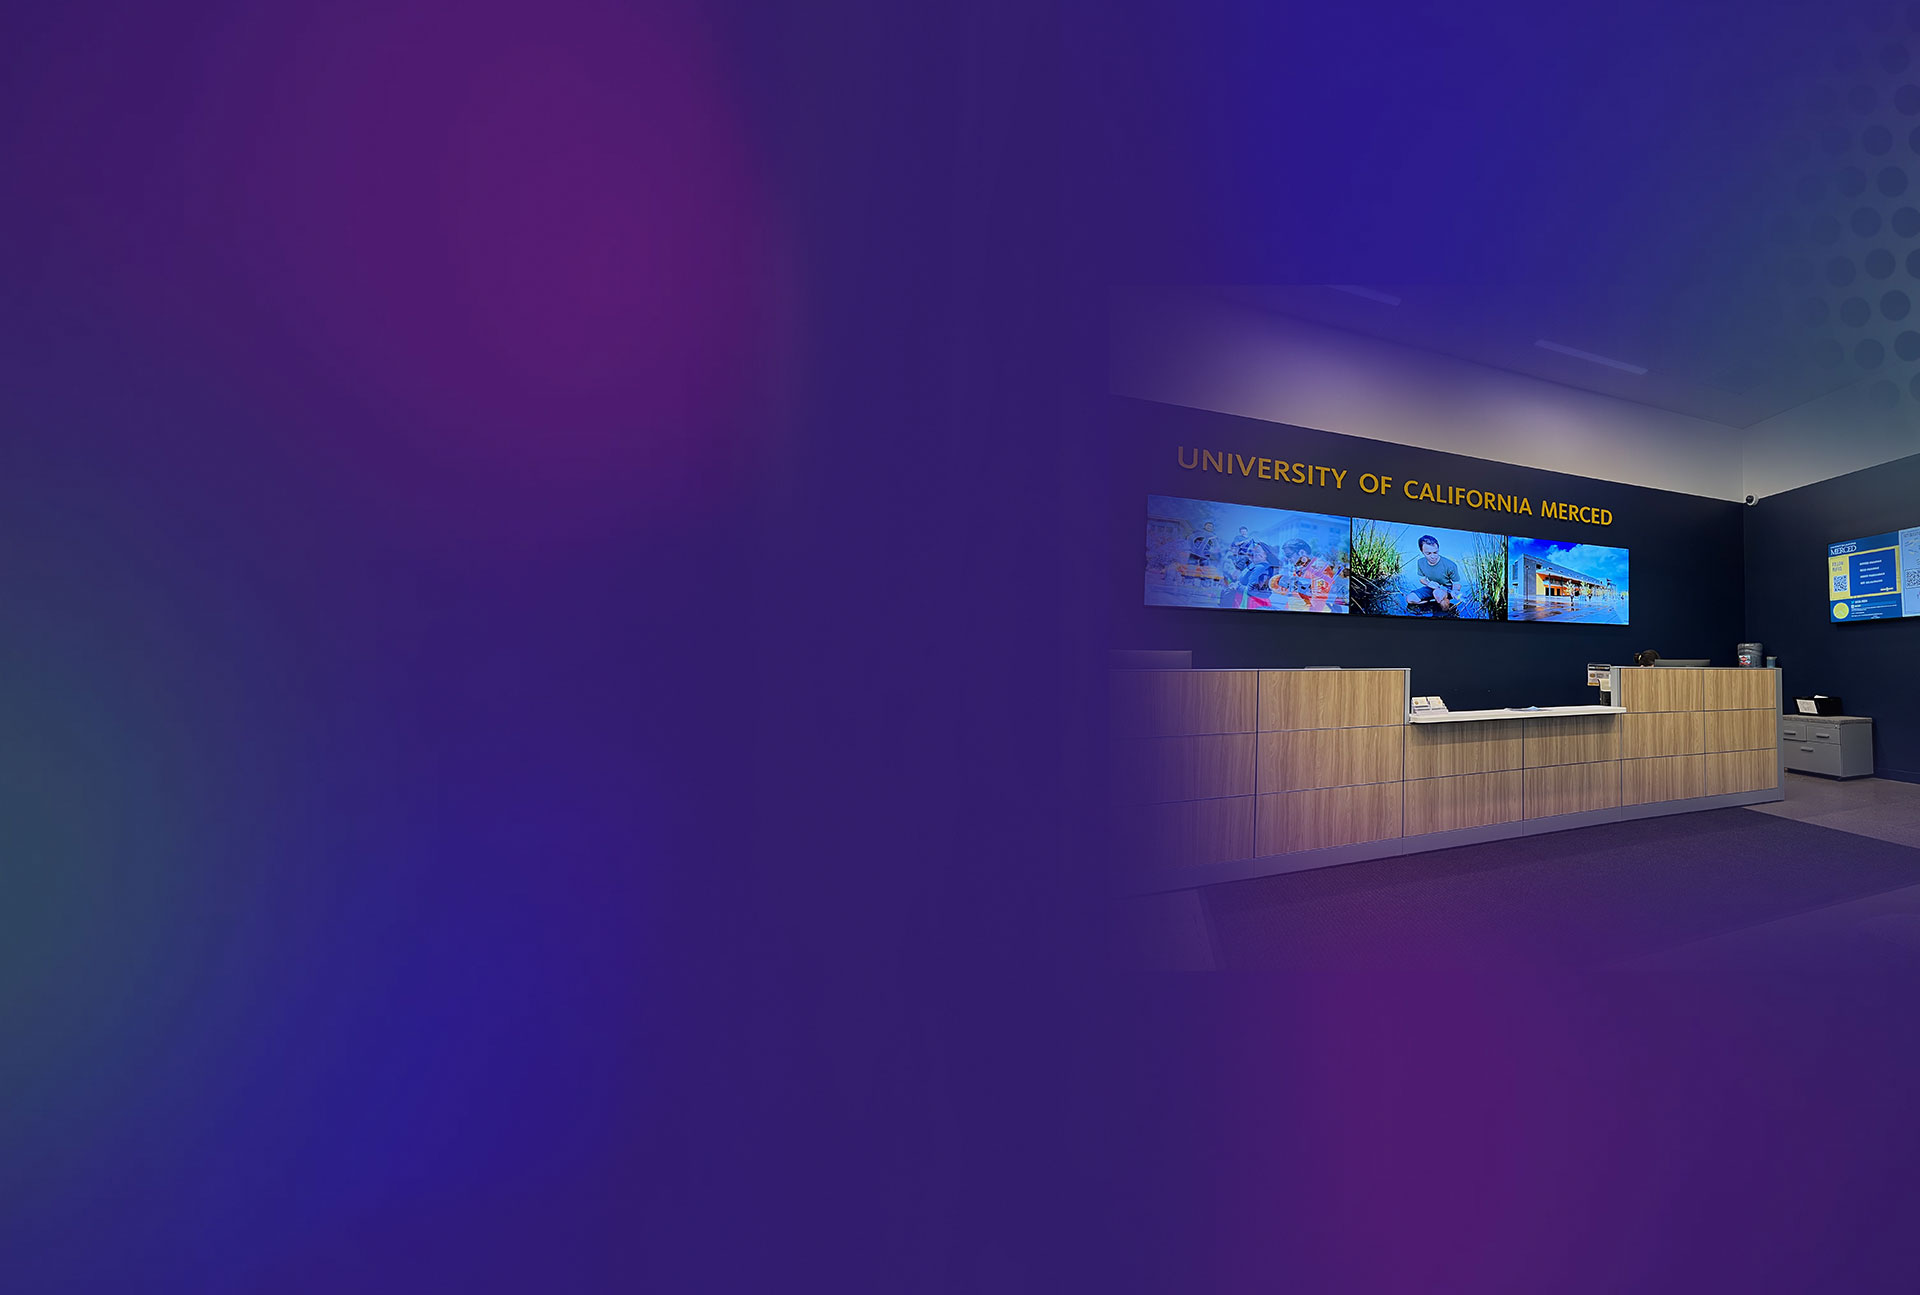 BrightSignデジタルサイネージプレーヤーを壁面に設置したカリフォルニア大学マーセッド校のヒーロー映像